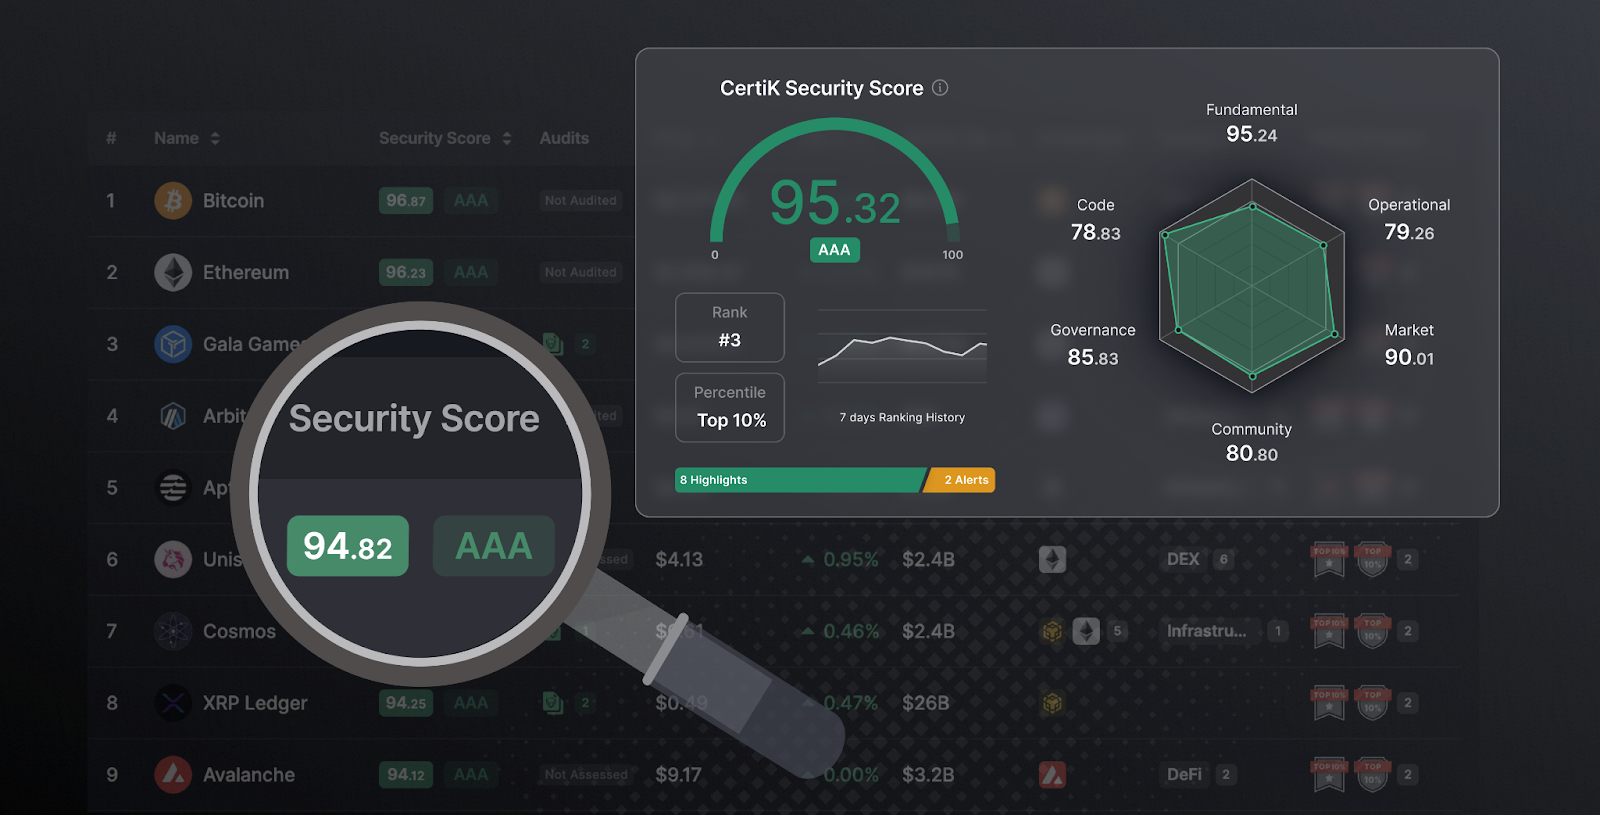 CertiK Security Score Overview